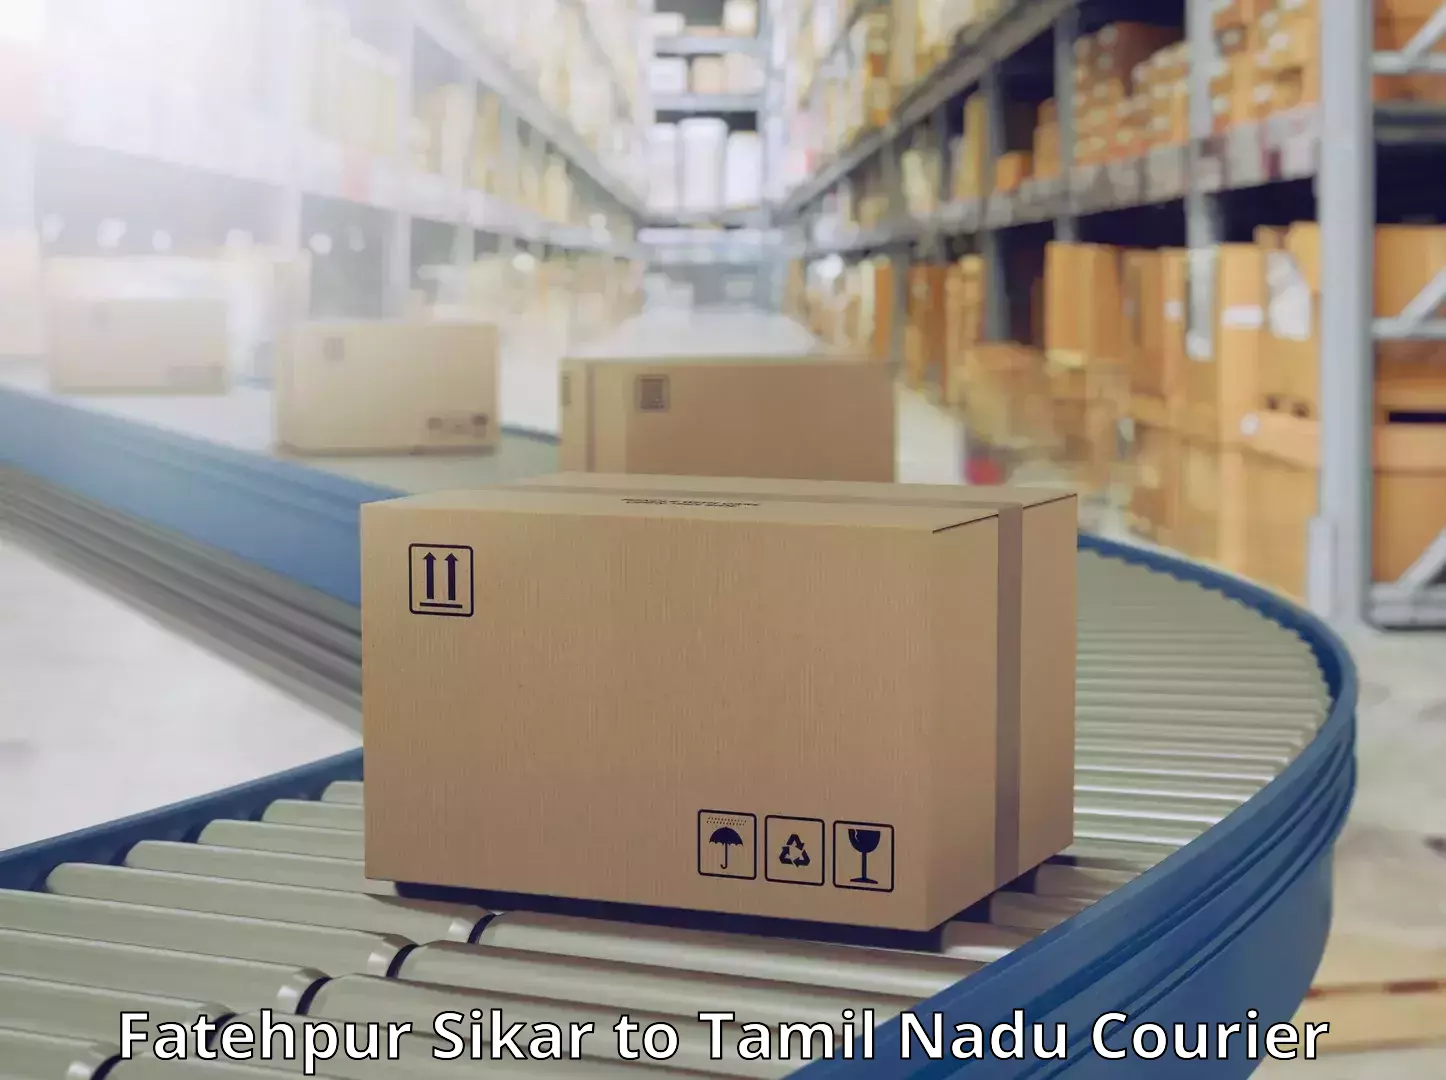 Global shipping solutions Fatehpur Sikar to Tamil Nadu